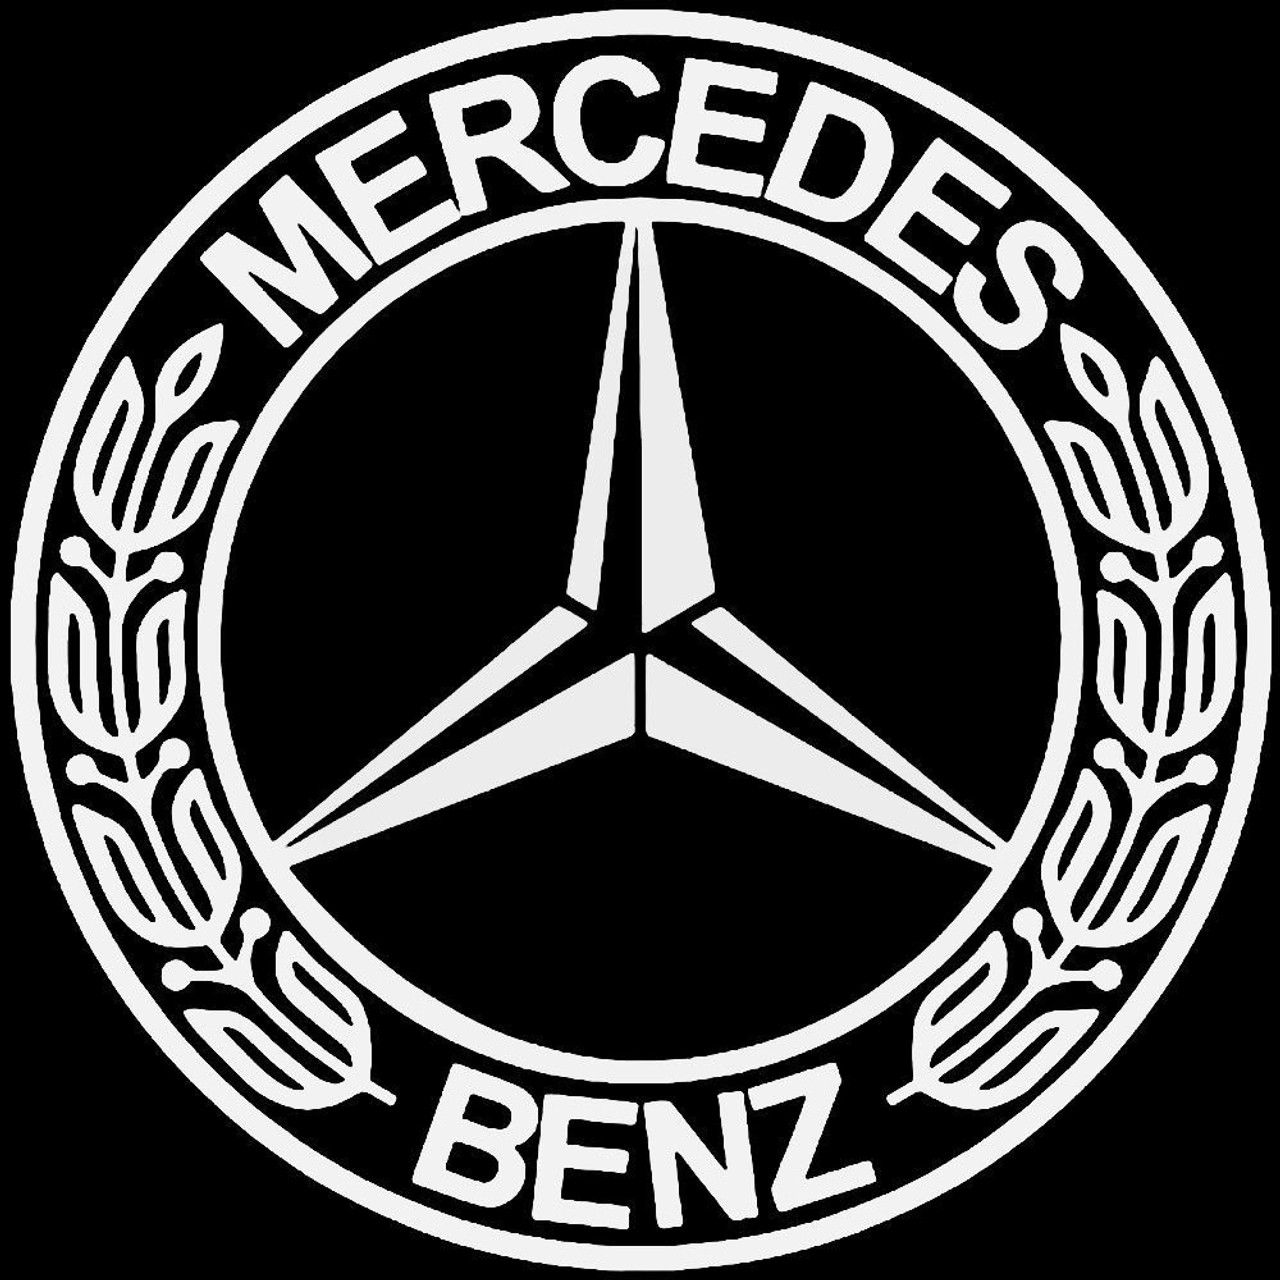 Mercedes Benz logo  Mercedes benz logo, Mercedes benz, Mercedes